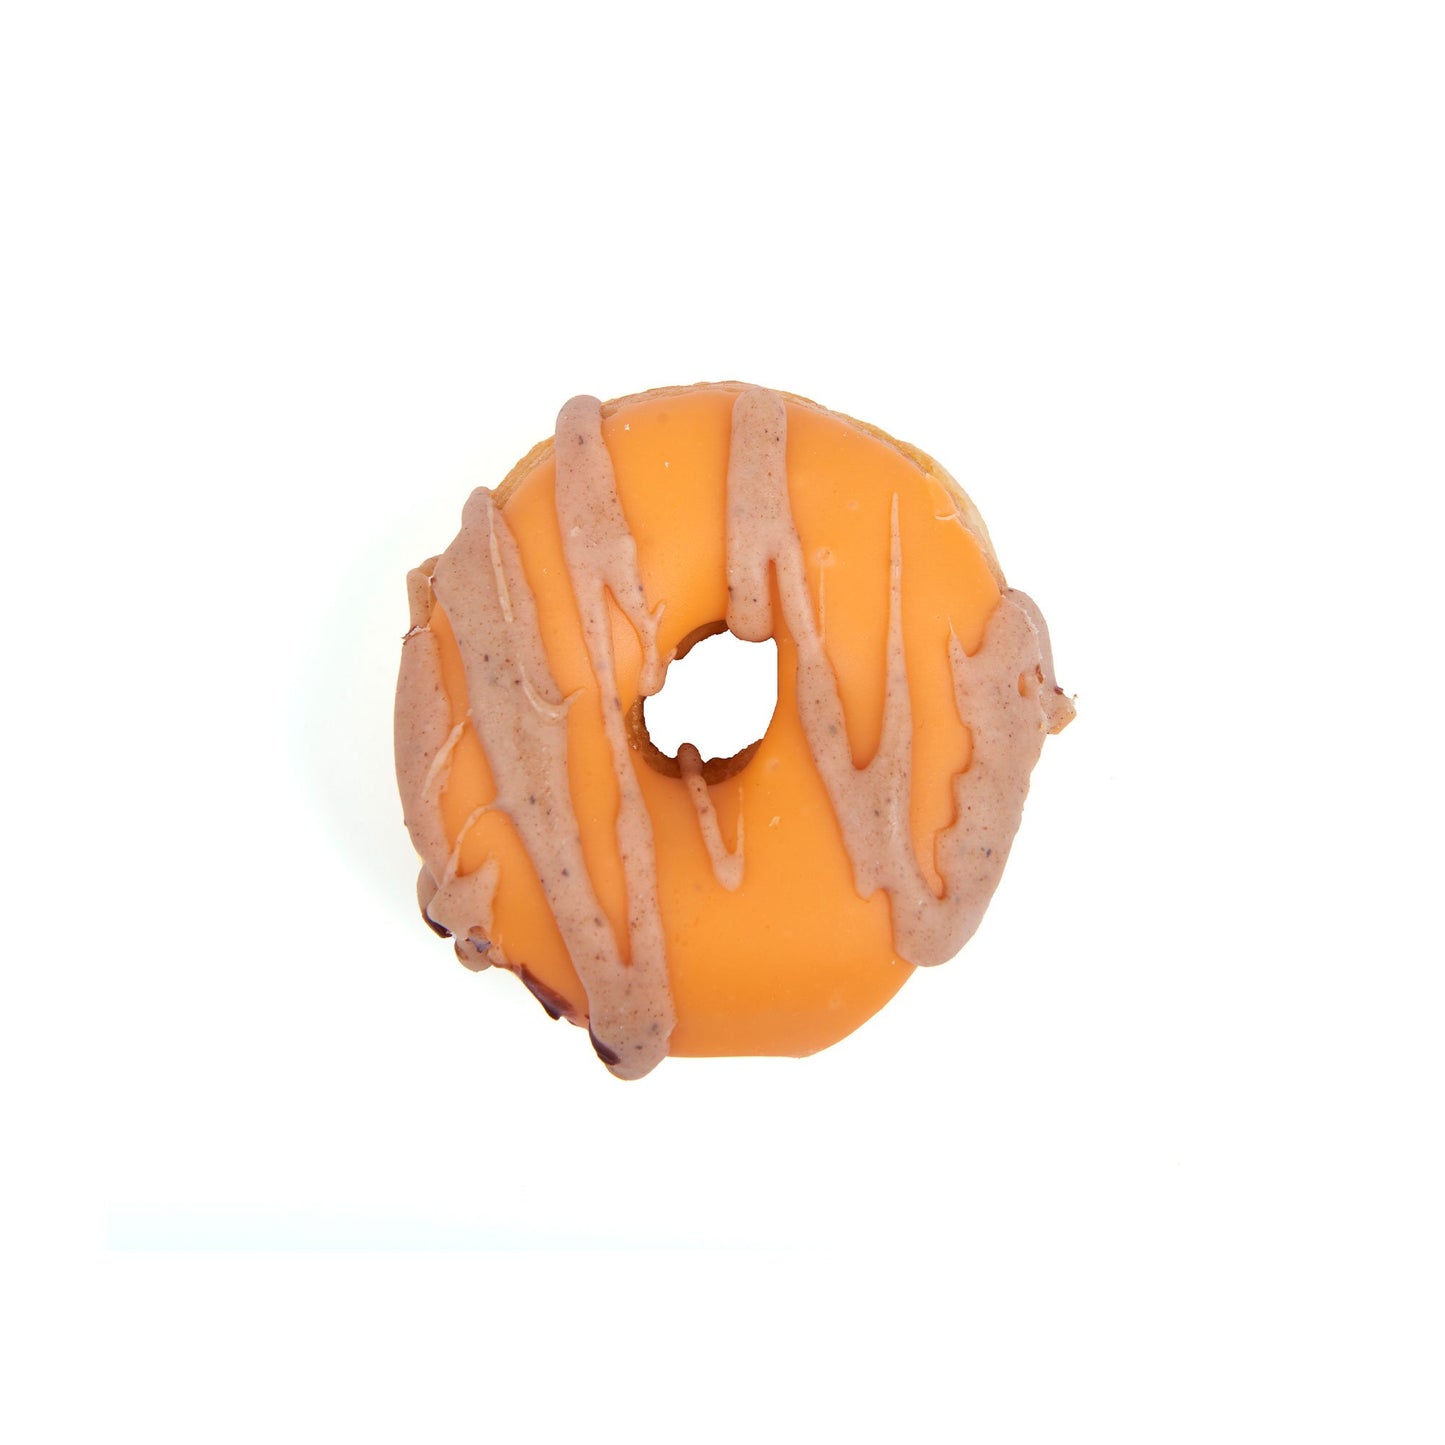 Pumpkin Spice Donut